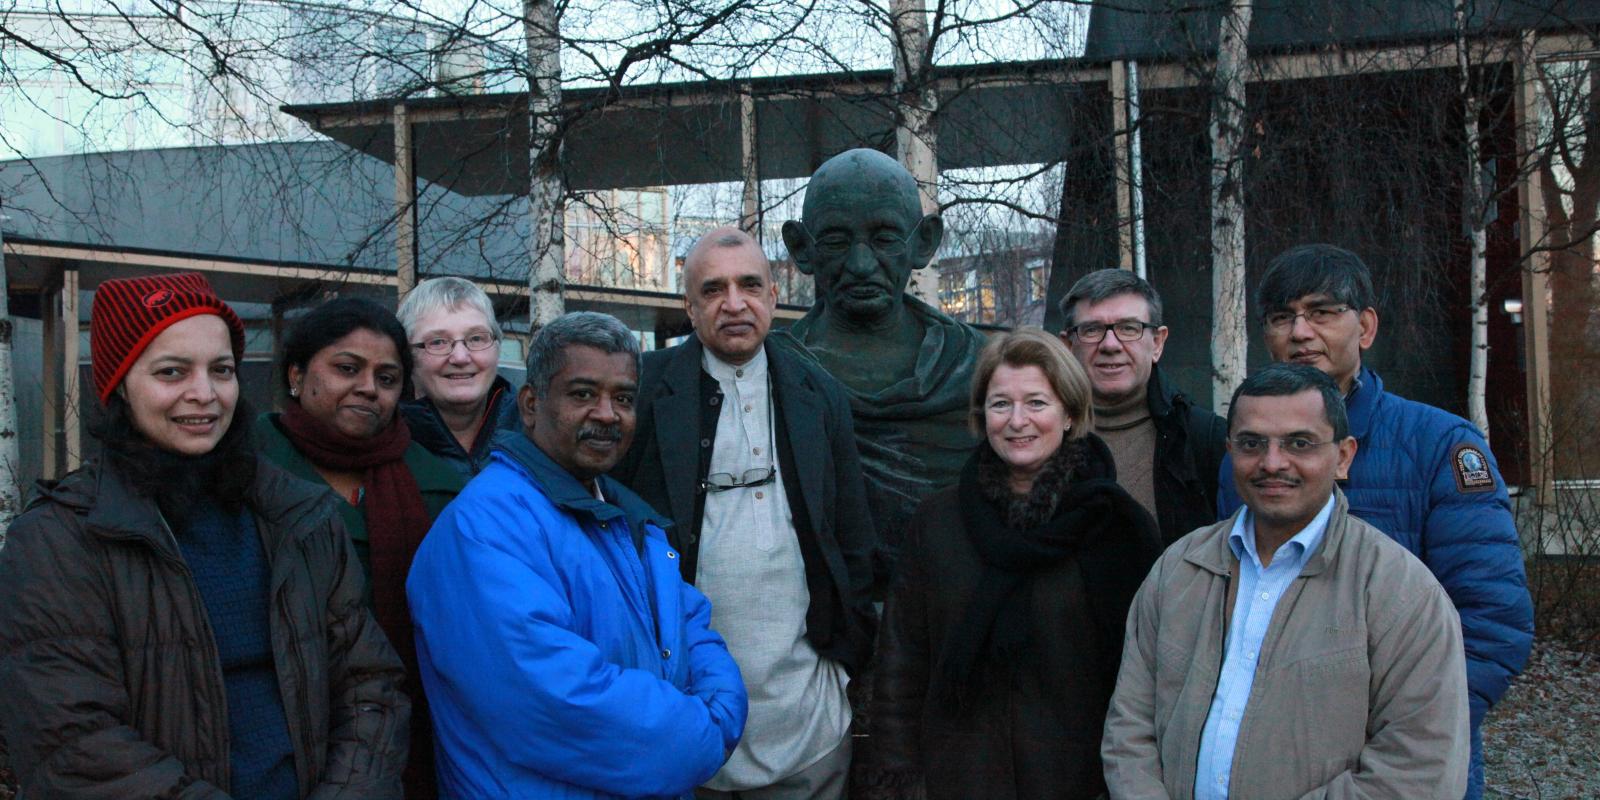 NAFKAM og UiT hadde besøk denne uken av samarbeidspartnere fra både India og Norge. Her ved Gandhi-statuen på UiTs campus. F.v. Ashwini Godbole, Vijayalakshmi Banu, Solveig Wiesener, Hariramamurthi Govindaswamy, Darshan Shankar, Anne Husebekk, Vinjar Fønnebø, Girish Tillu, Purusotam Basnet.